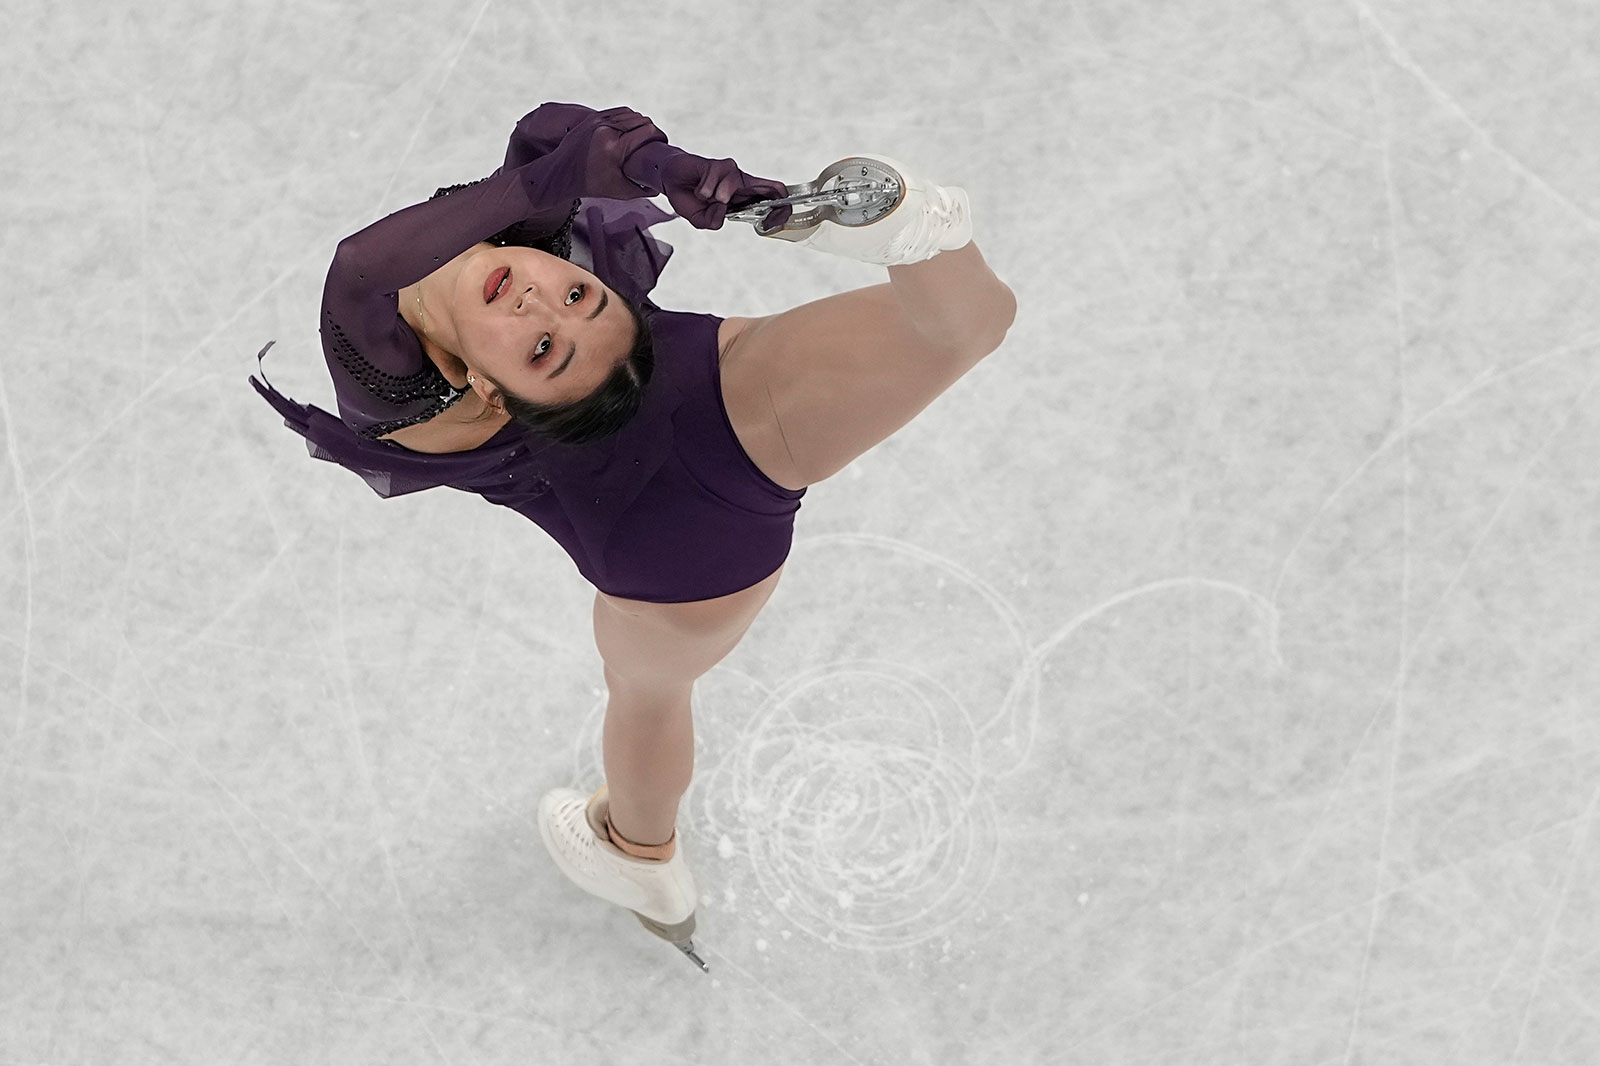 China's Zhu Yi competes in the women's single skating short program on February 15.